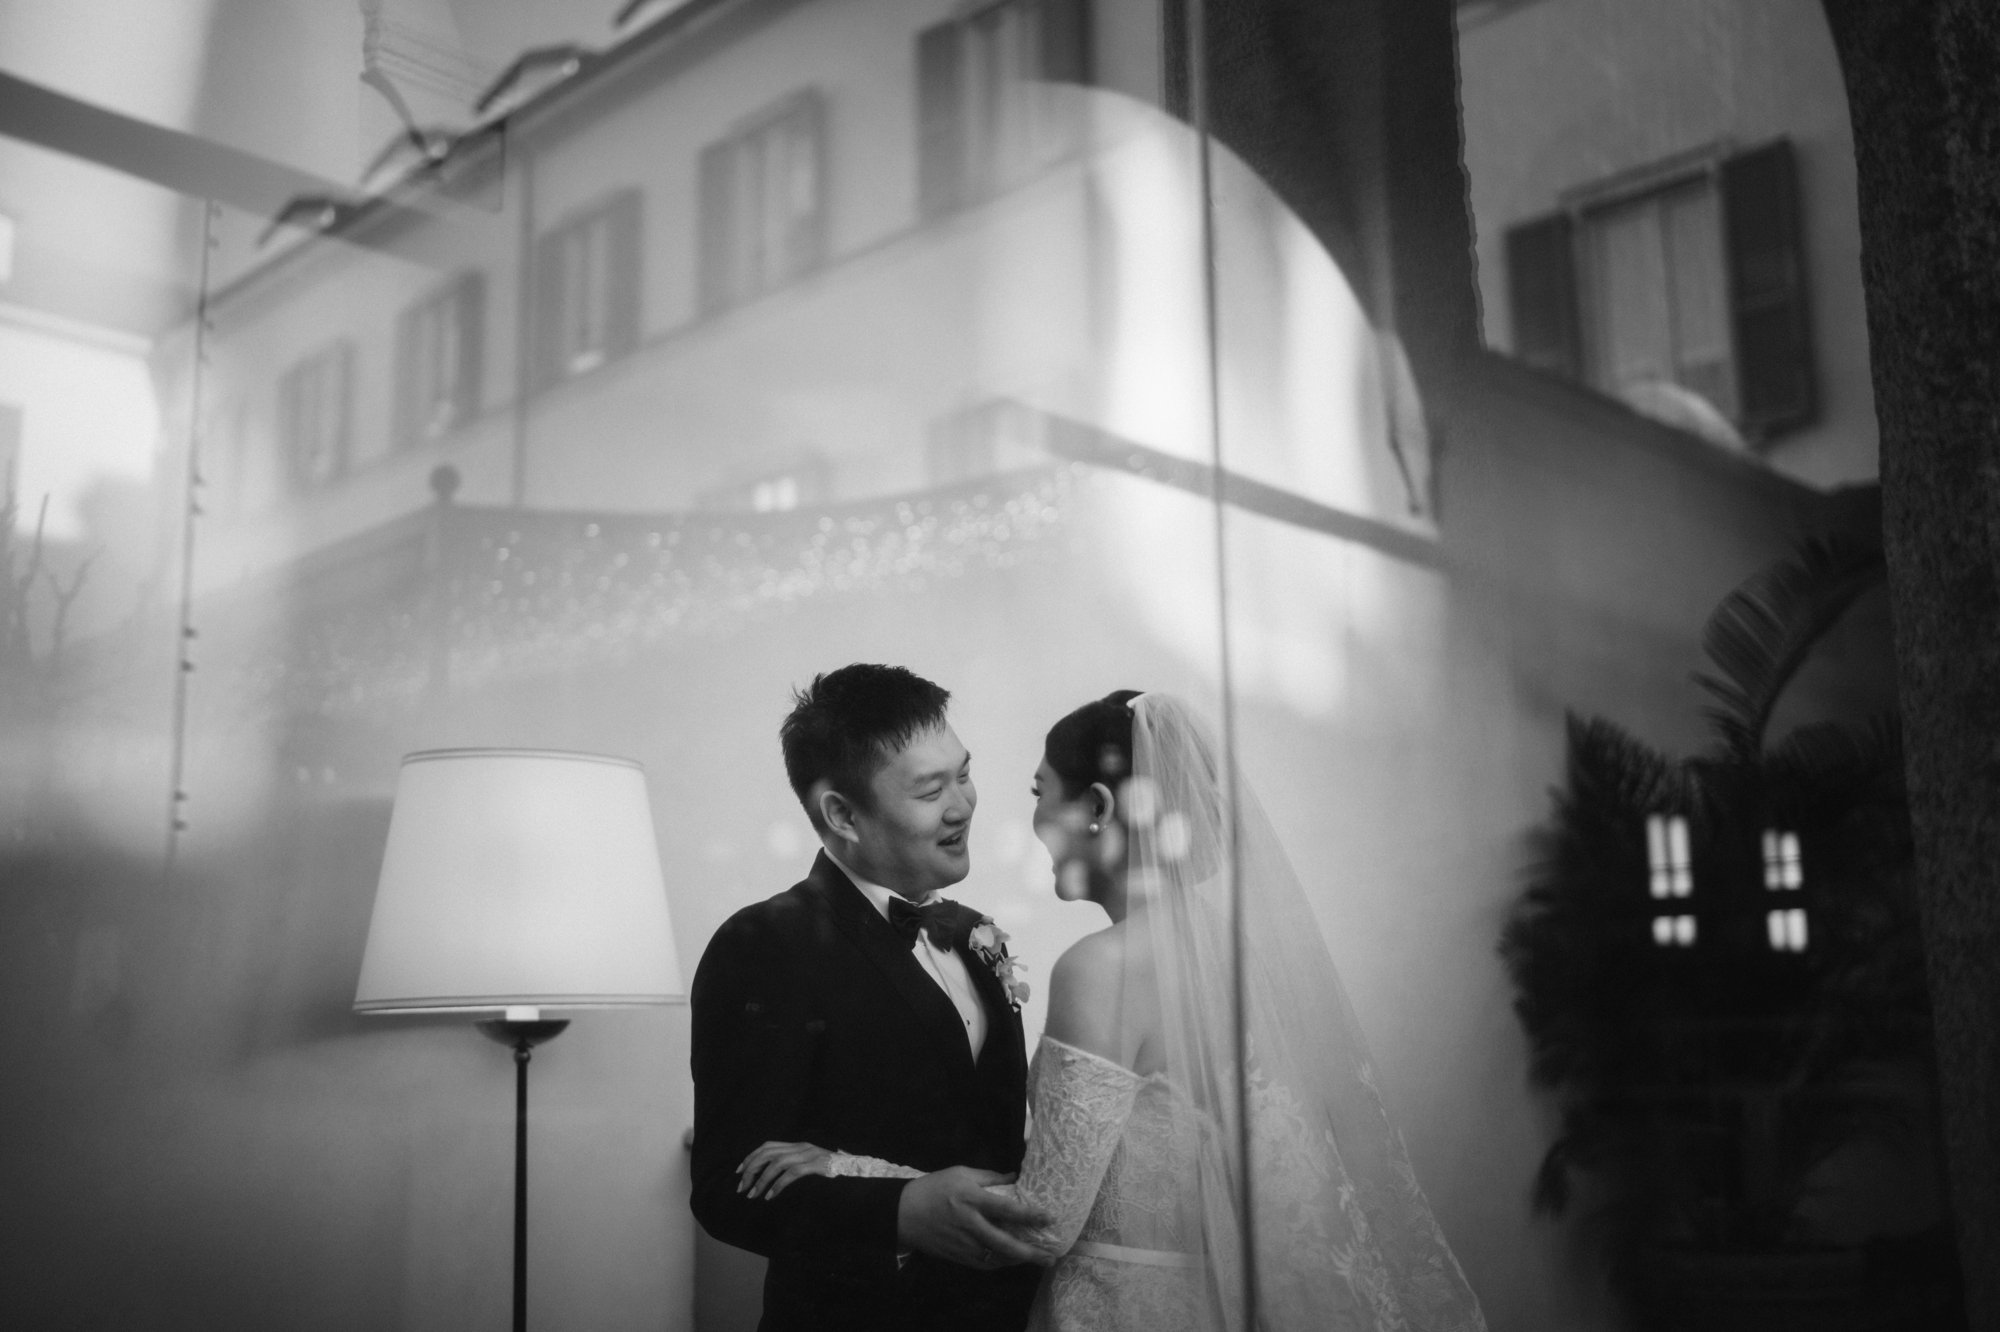 Prawira-Evelyn-Dolomites-Italy-Santre wedding-Yefta Gunawan-Jeriko MUA-Carol Kuntjoro Photography-66.jpg